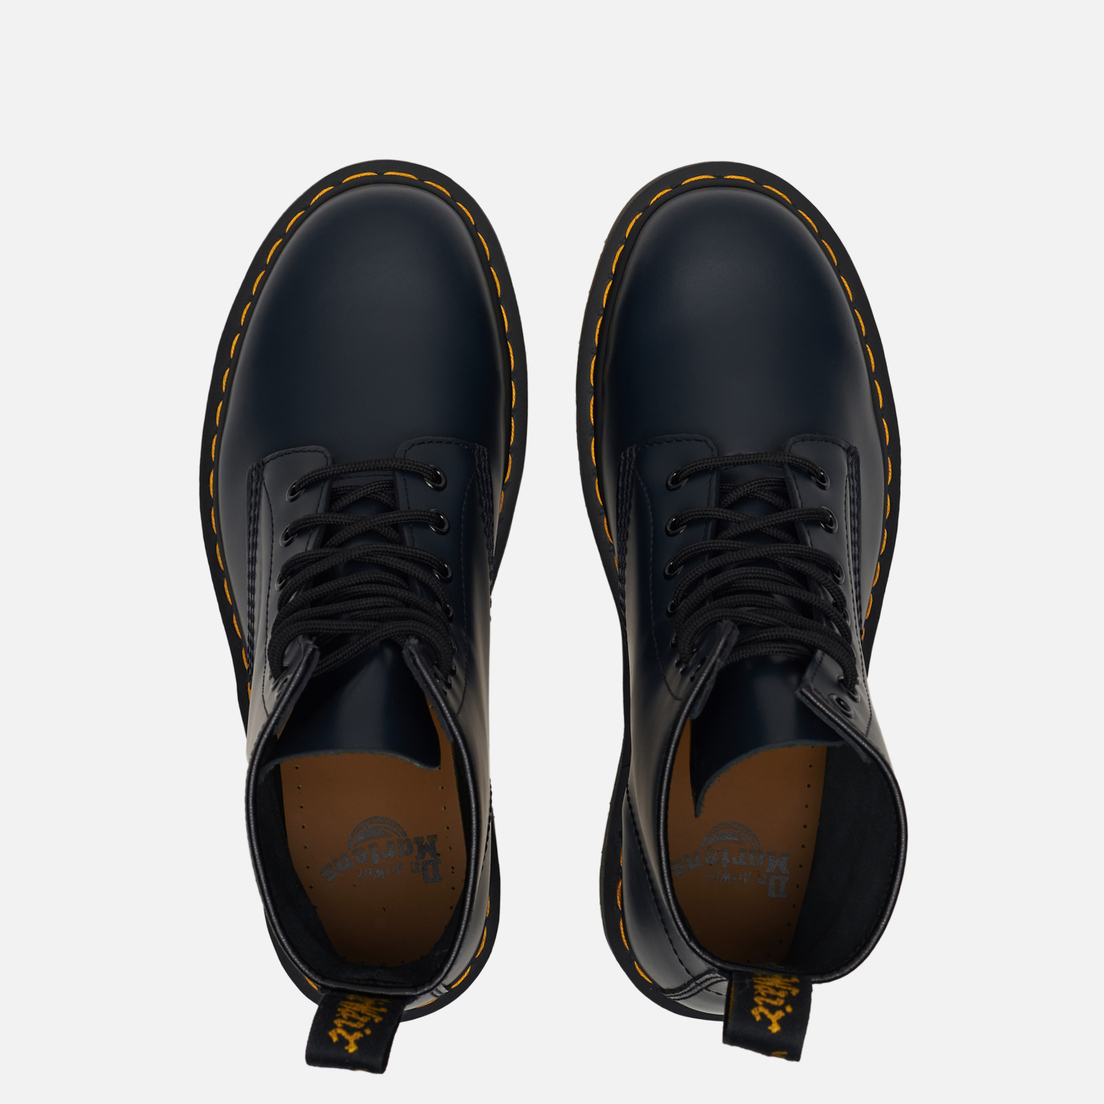 Dr. Martens Мужские ботинки 1460 Smooth Leather